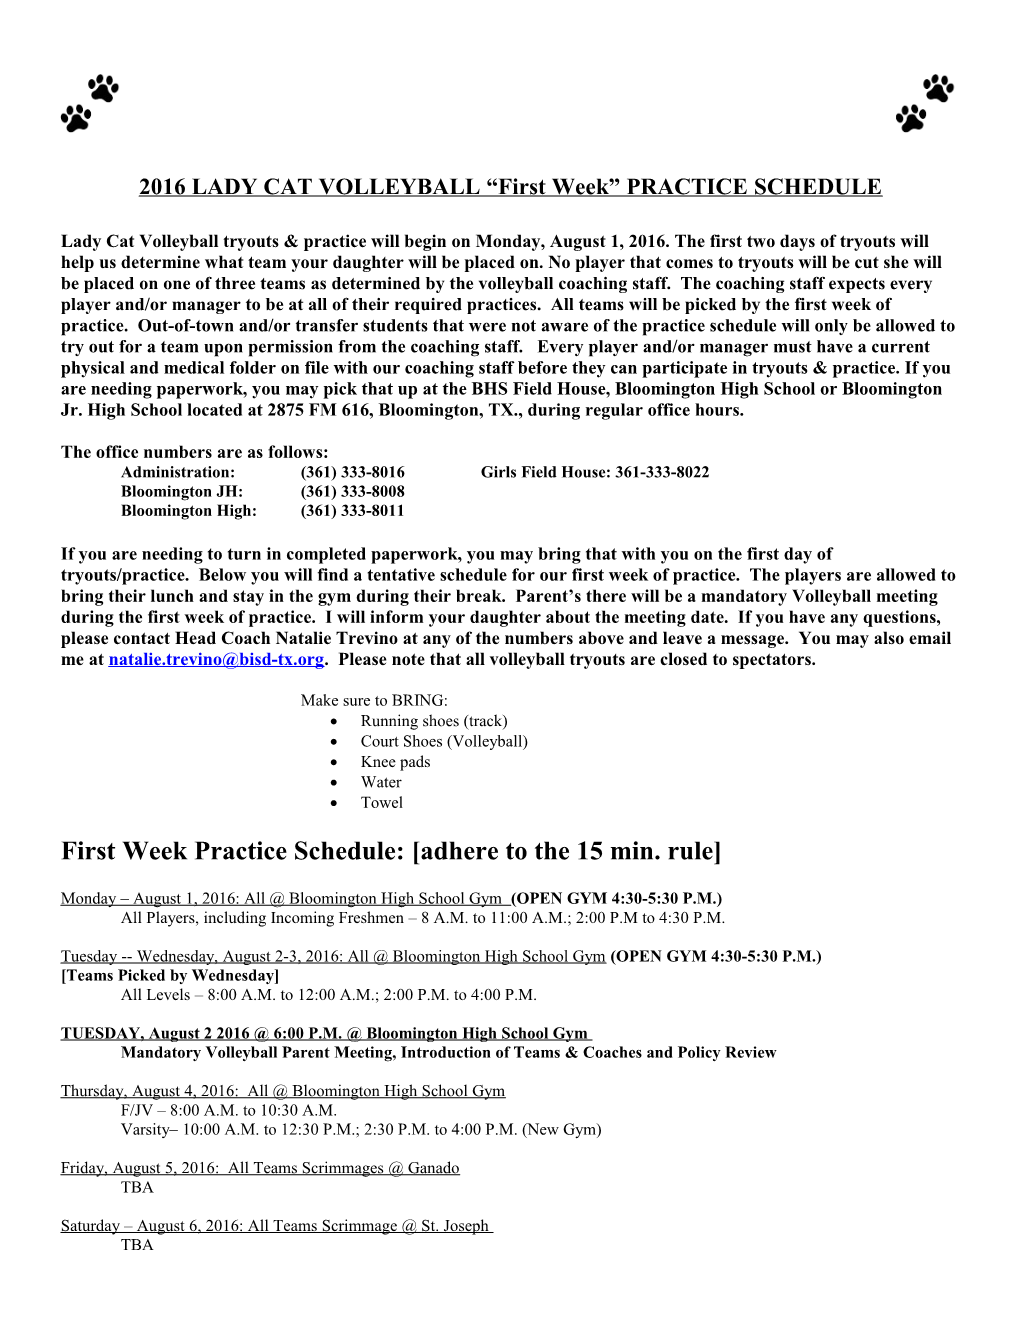 2011 Mhs Volleyball Practice Schedule